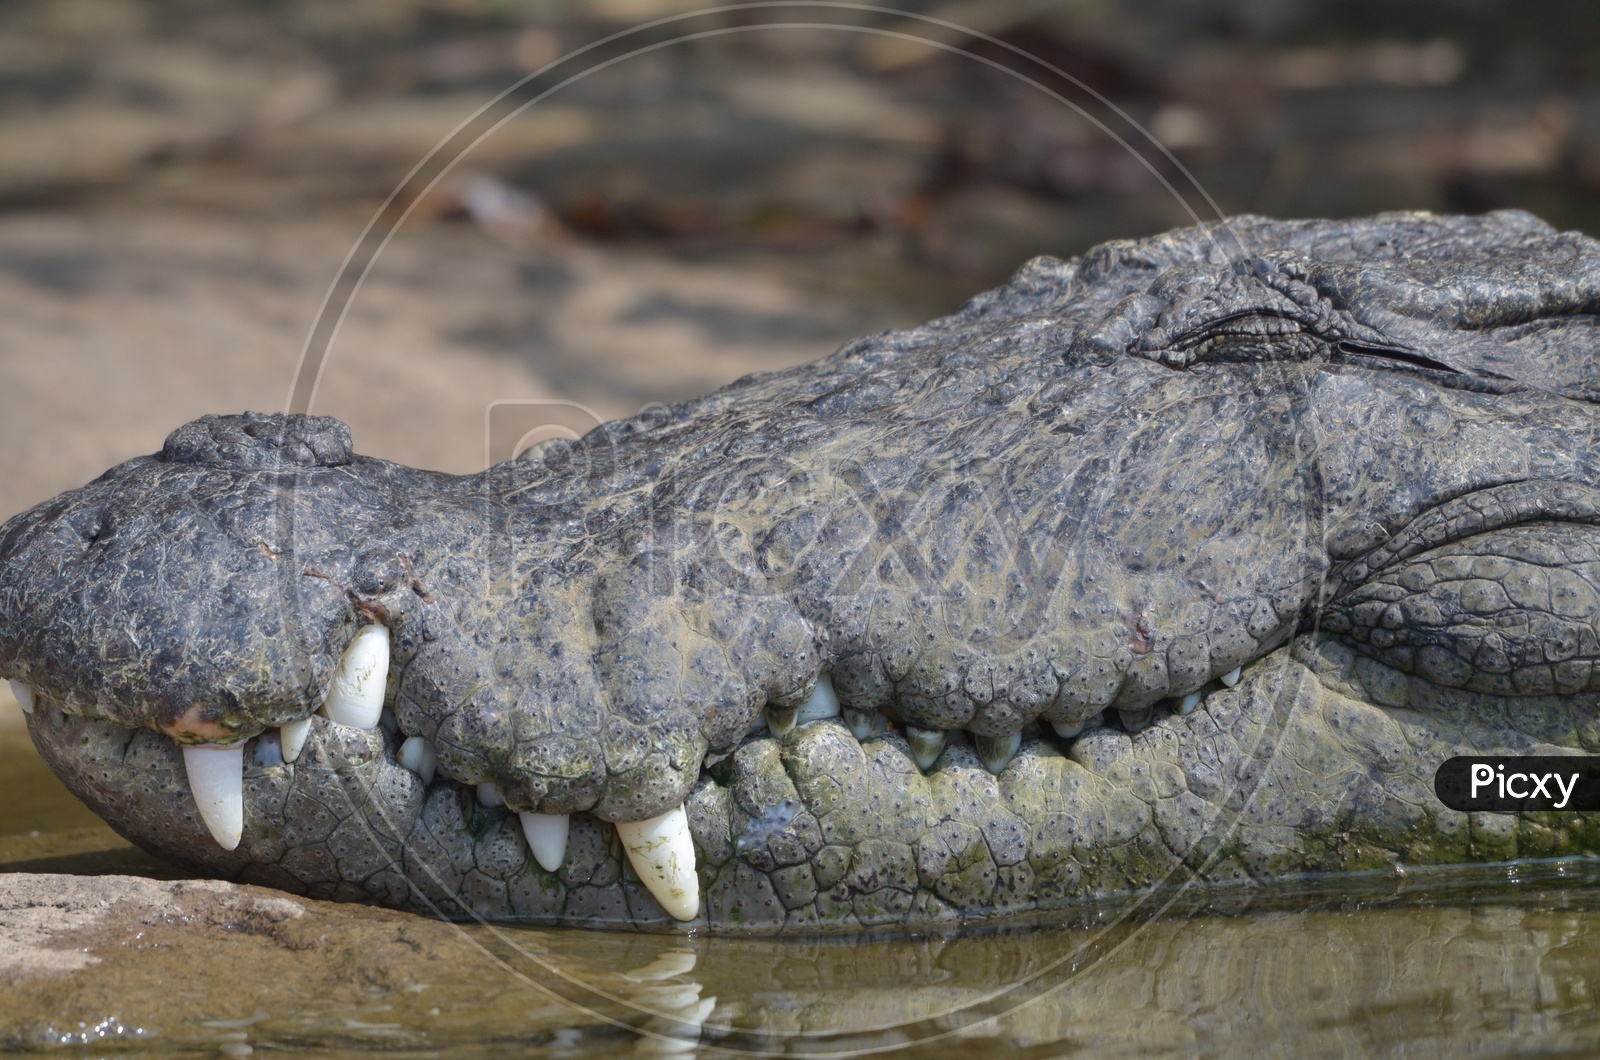 Crocodile at Ranganathittu Bird Sanctuary